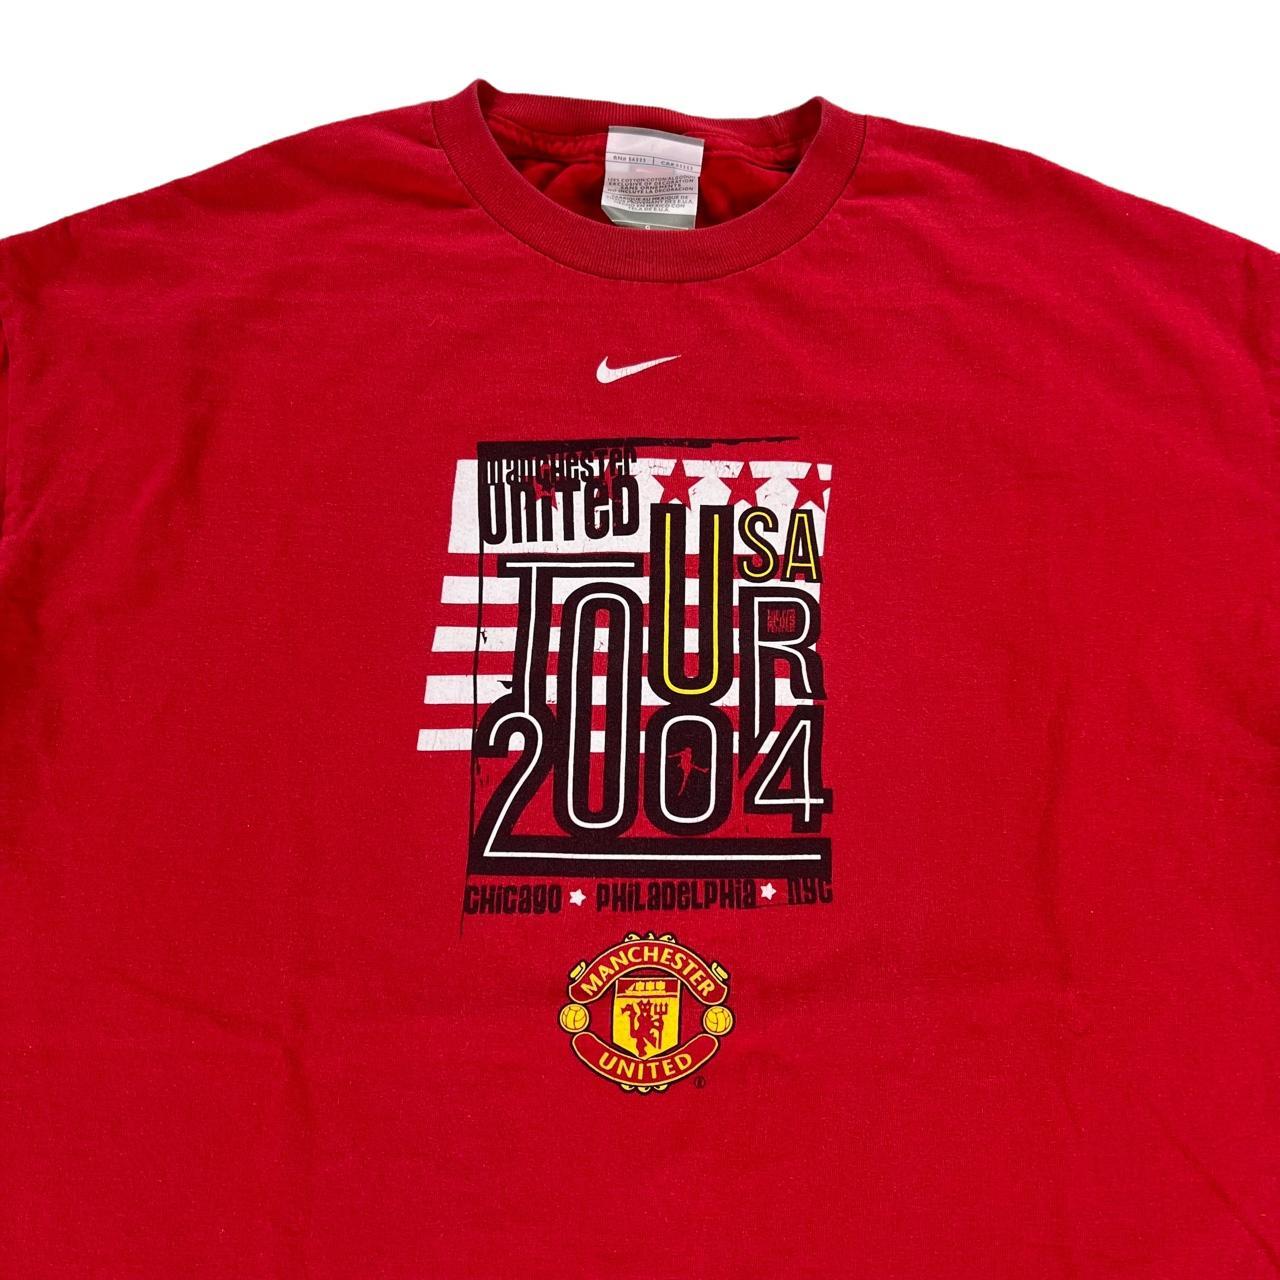 Product Image 2 - Vintage 2004 Manchester United USA